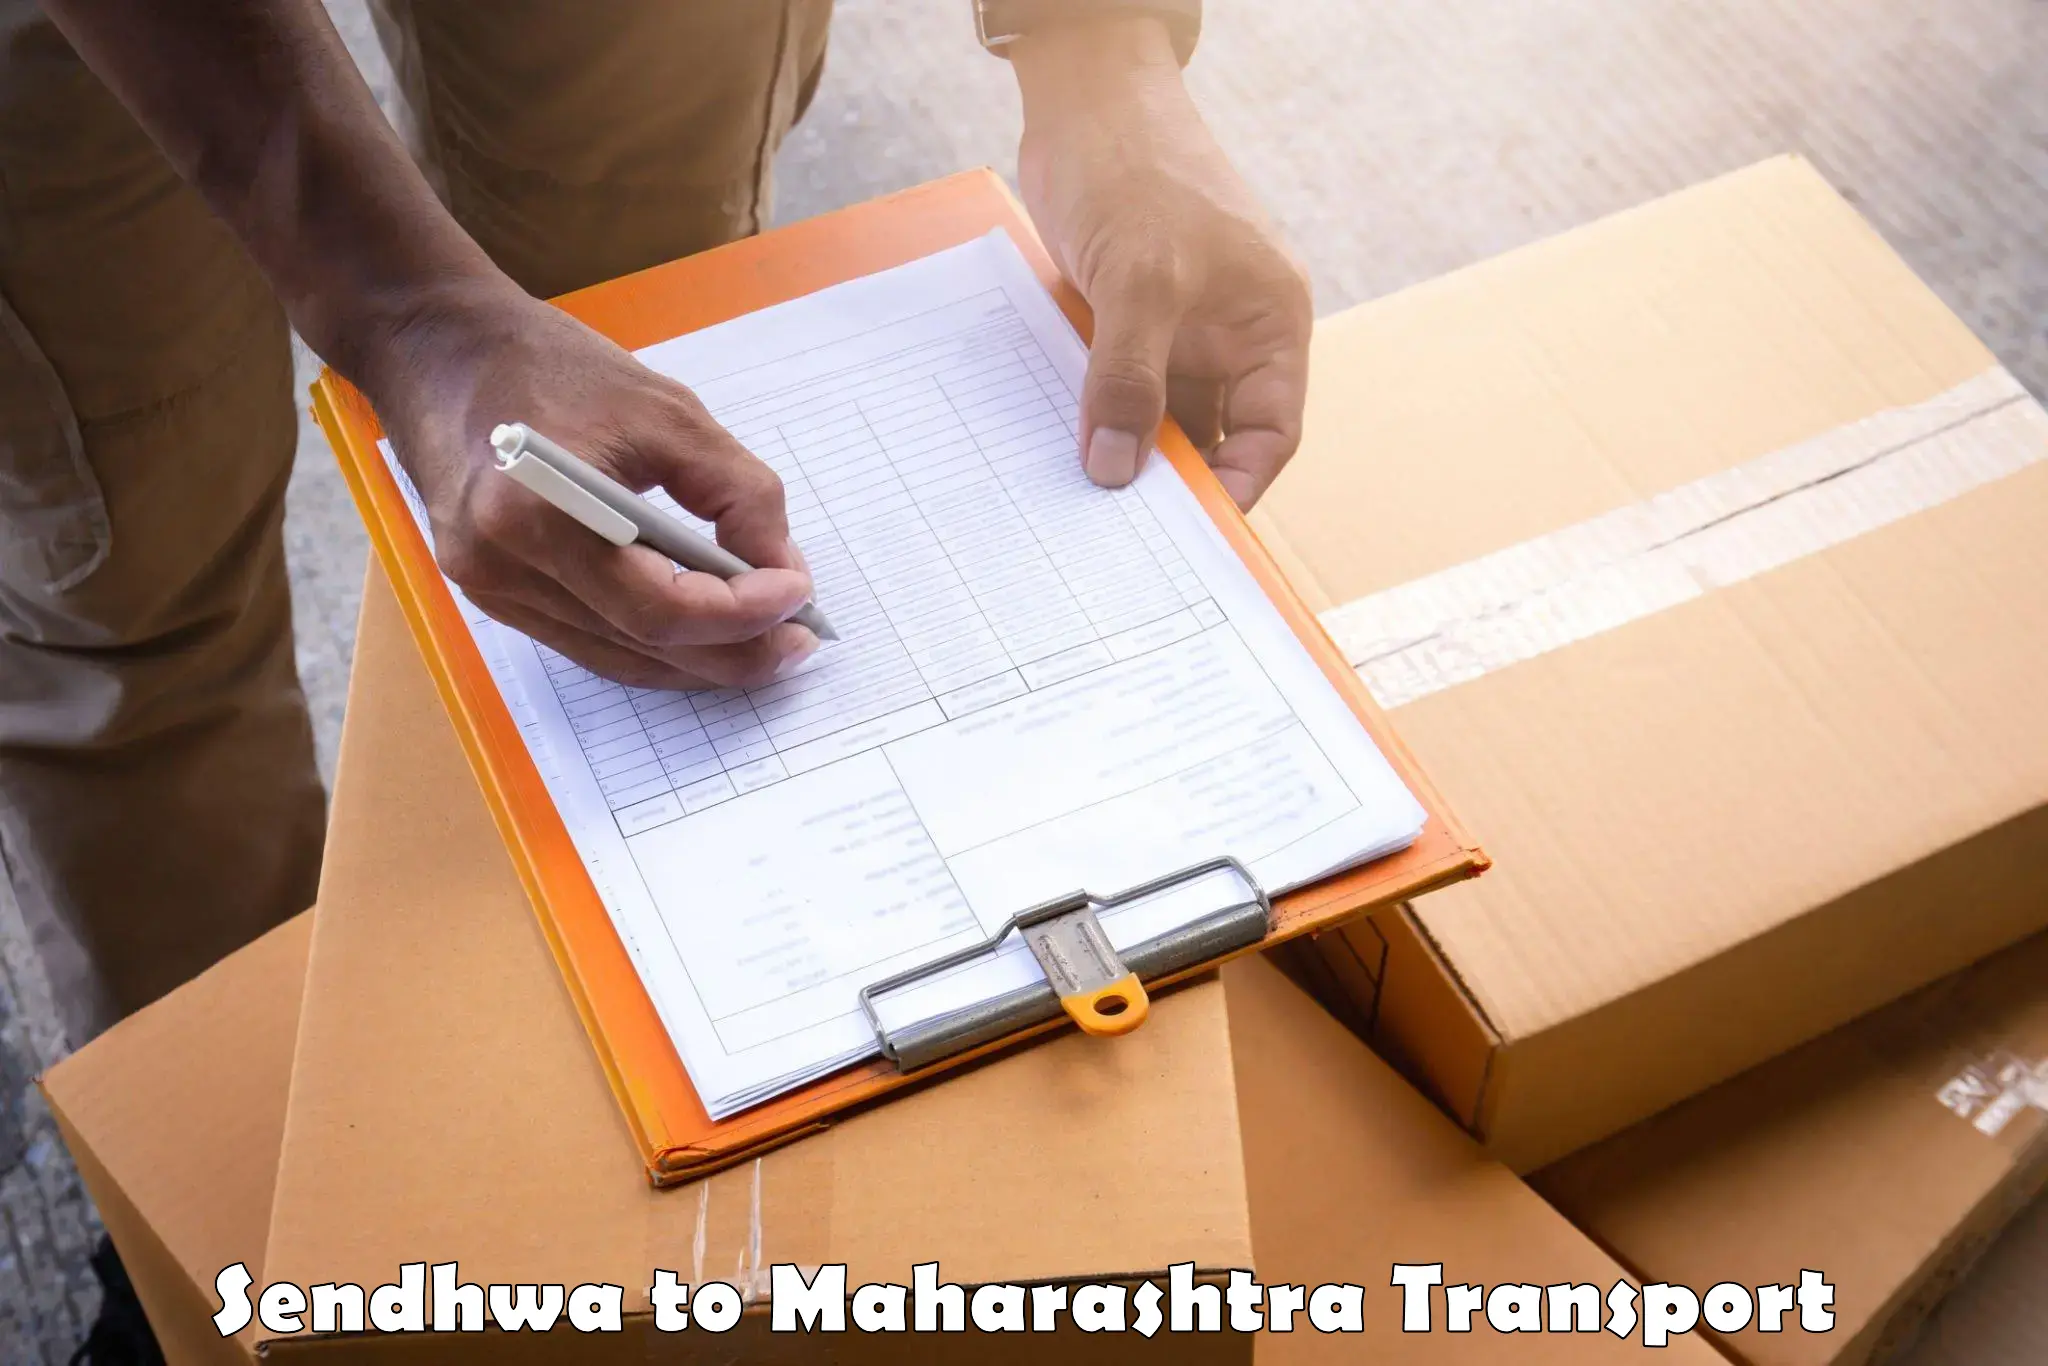 Truck transport companies in India Sendhwa to Roha